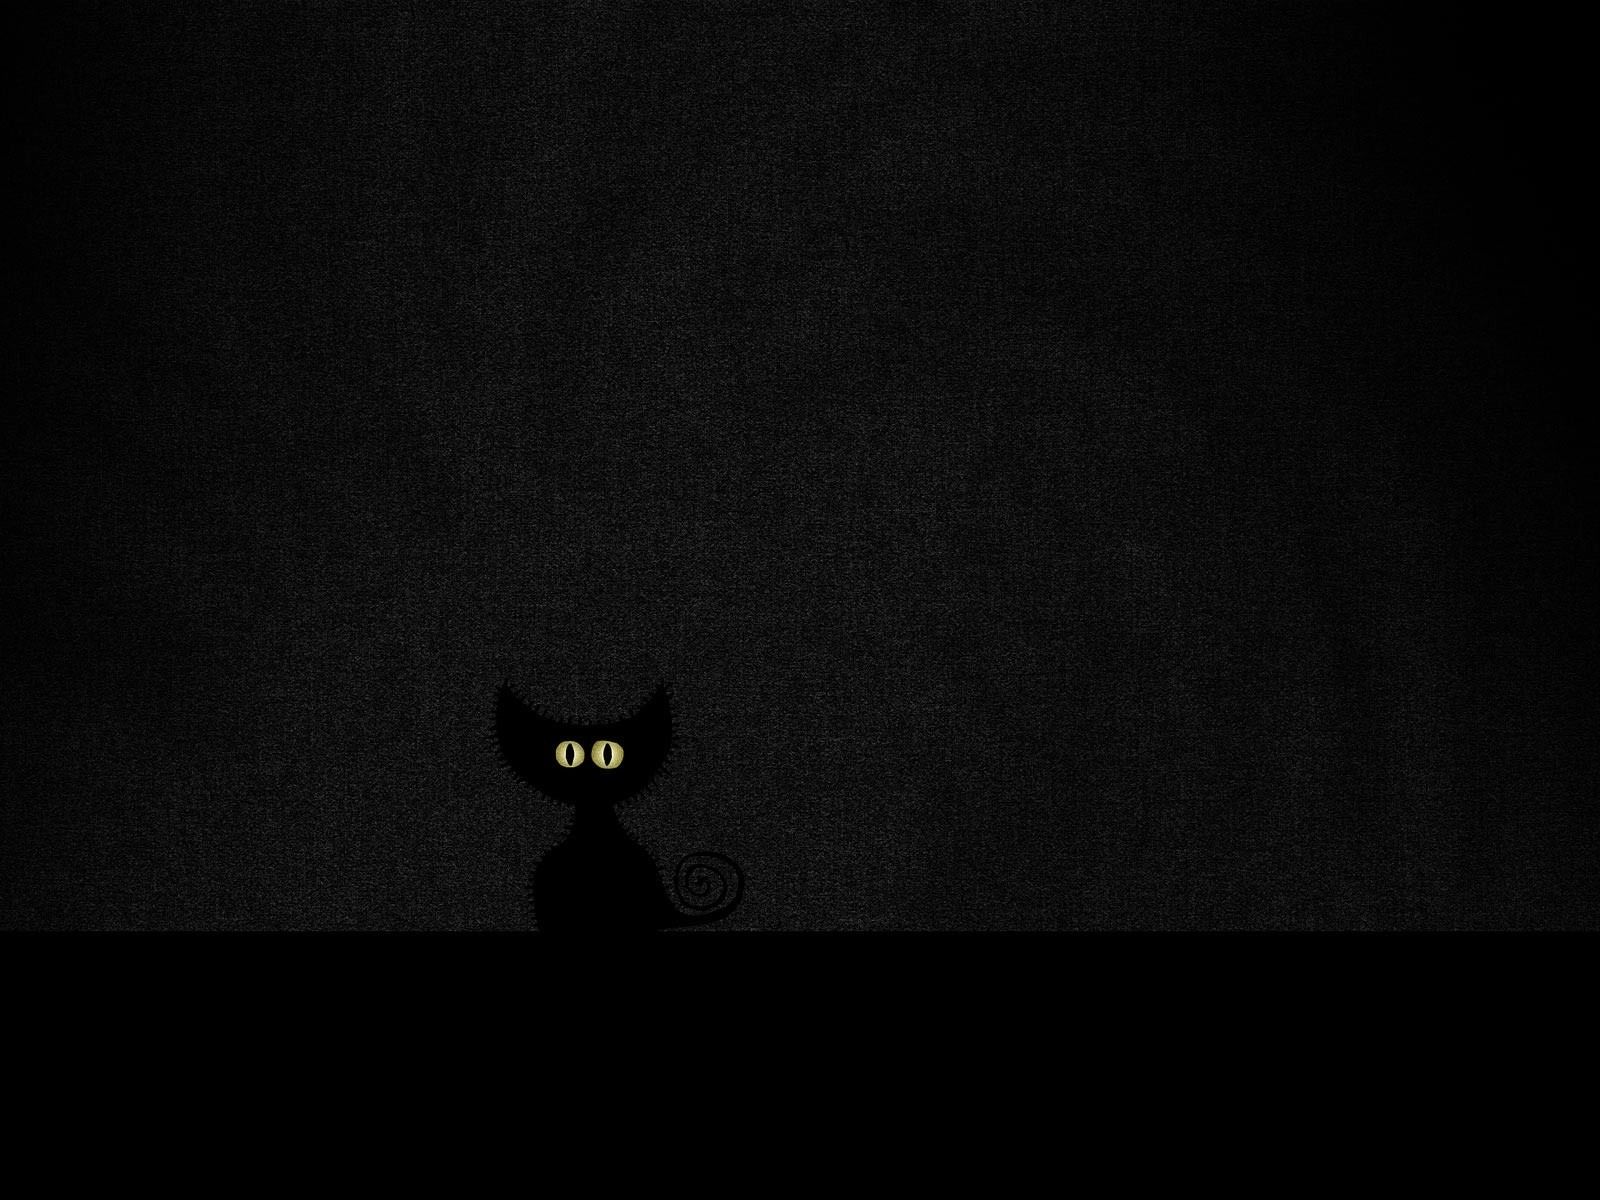 Minimalist wallpaper, Free desktop wallpaper background, Black cat image